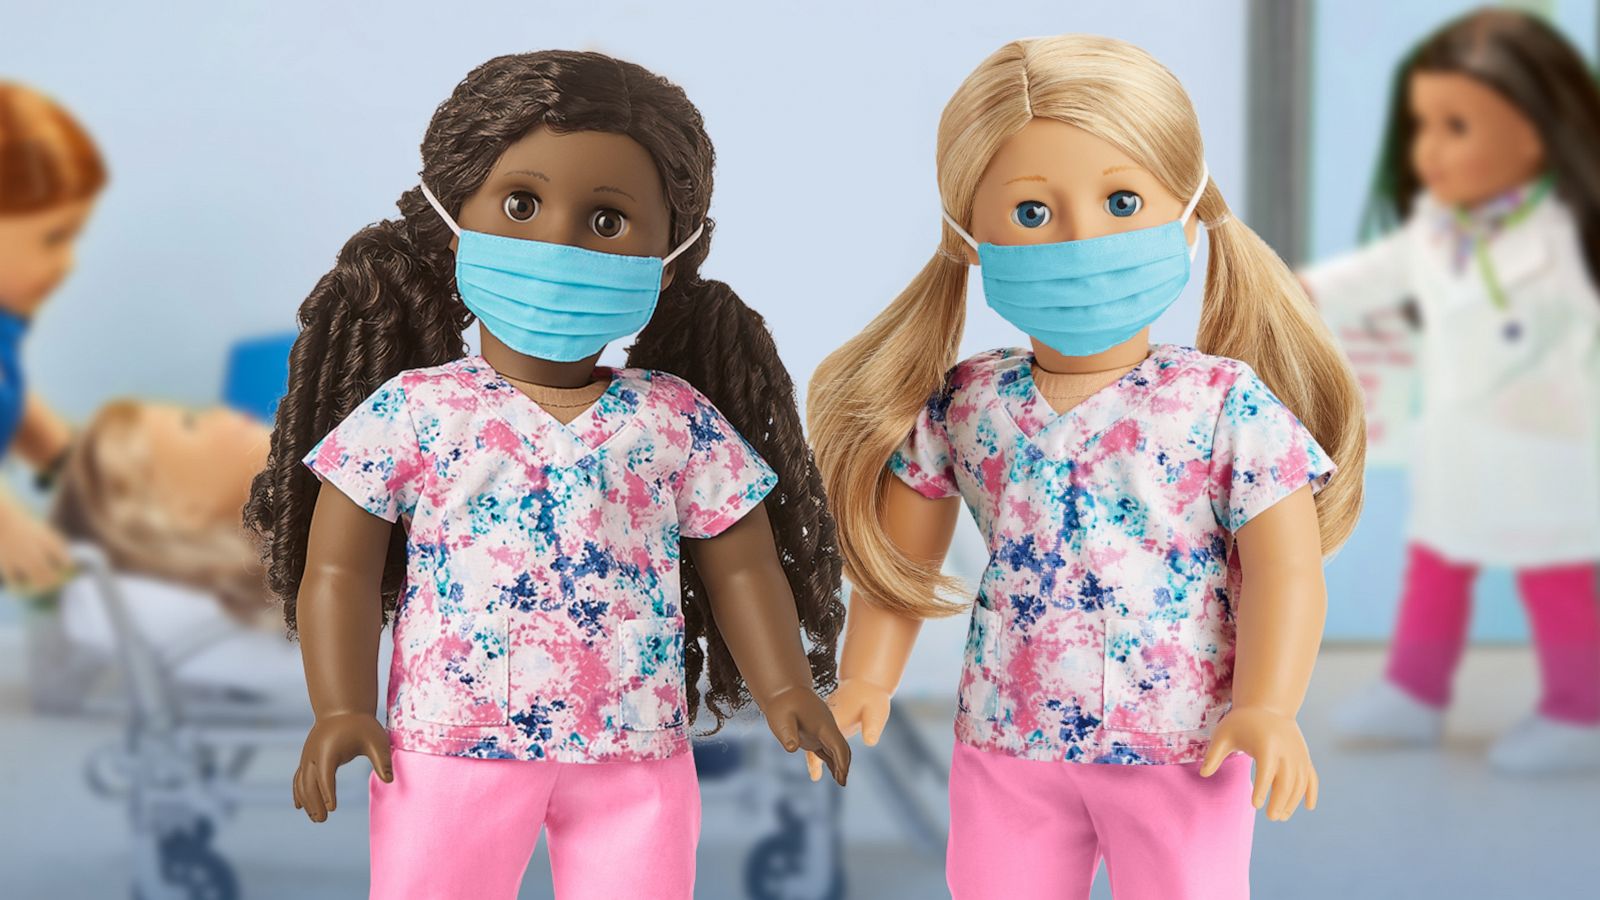 american girl doll nurse